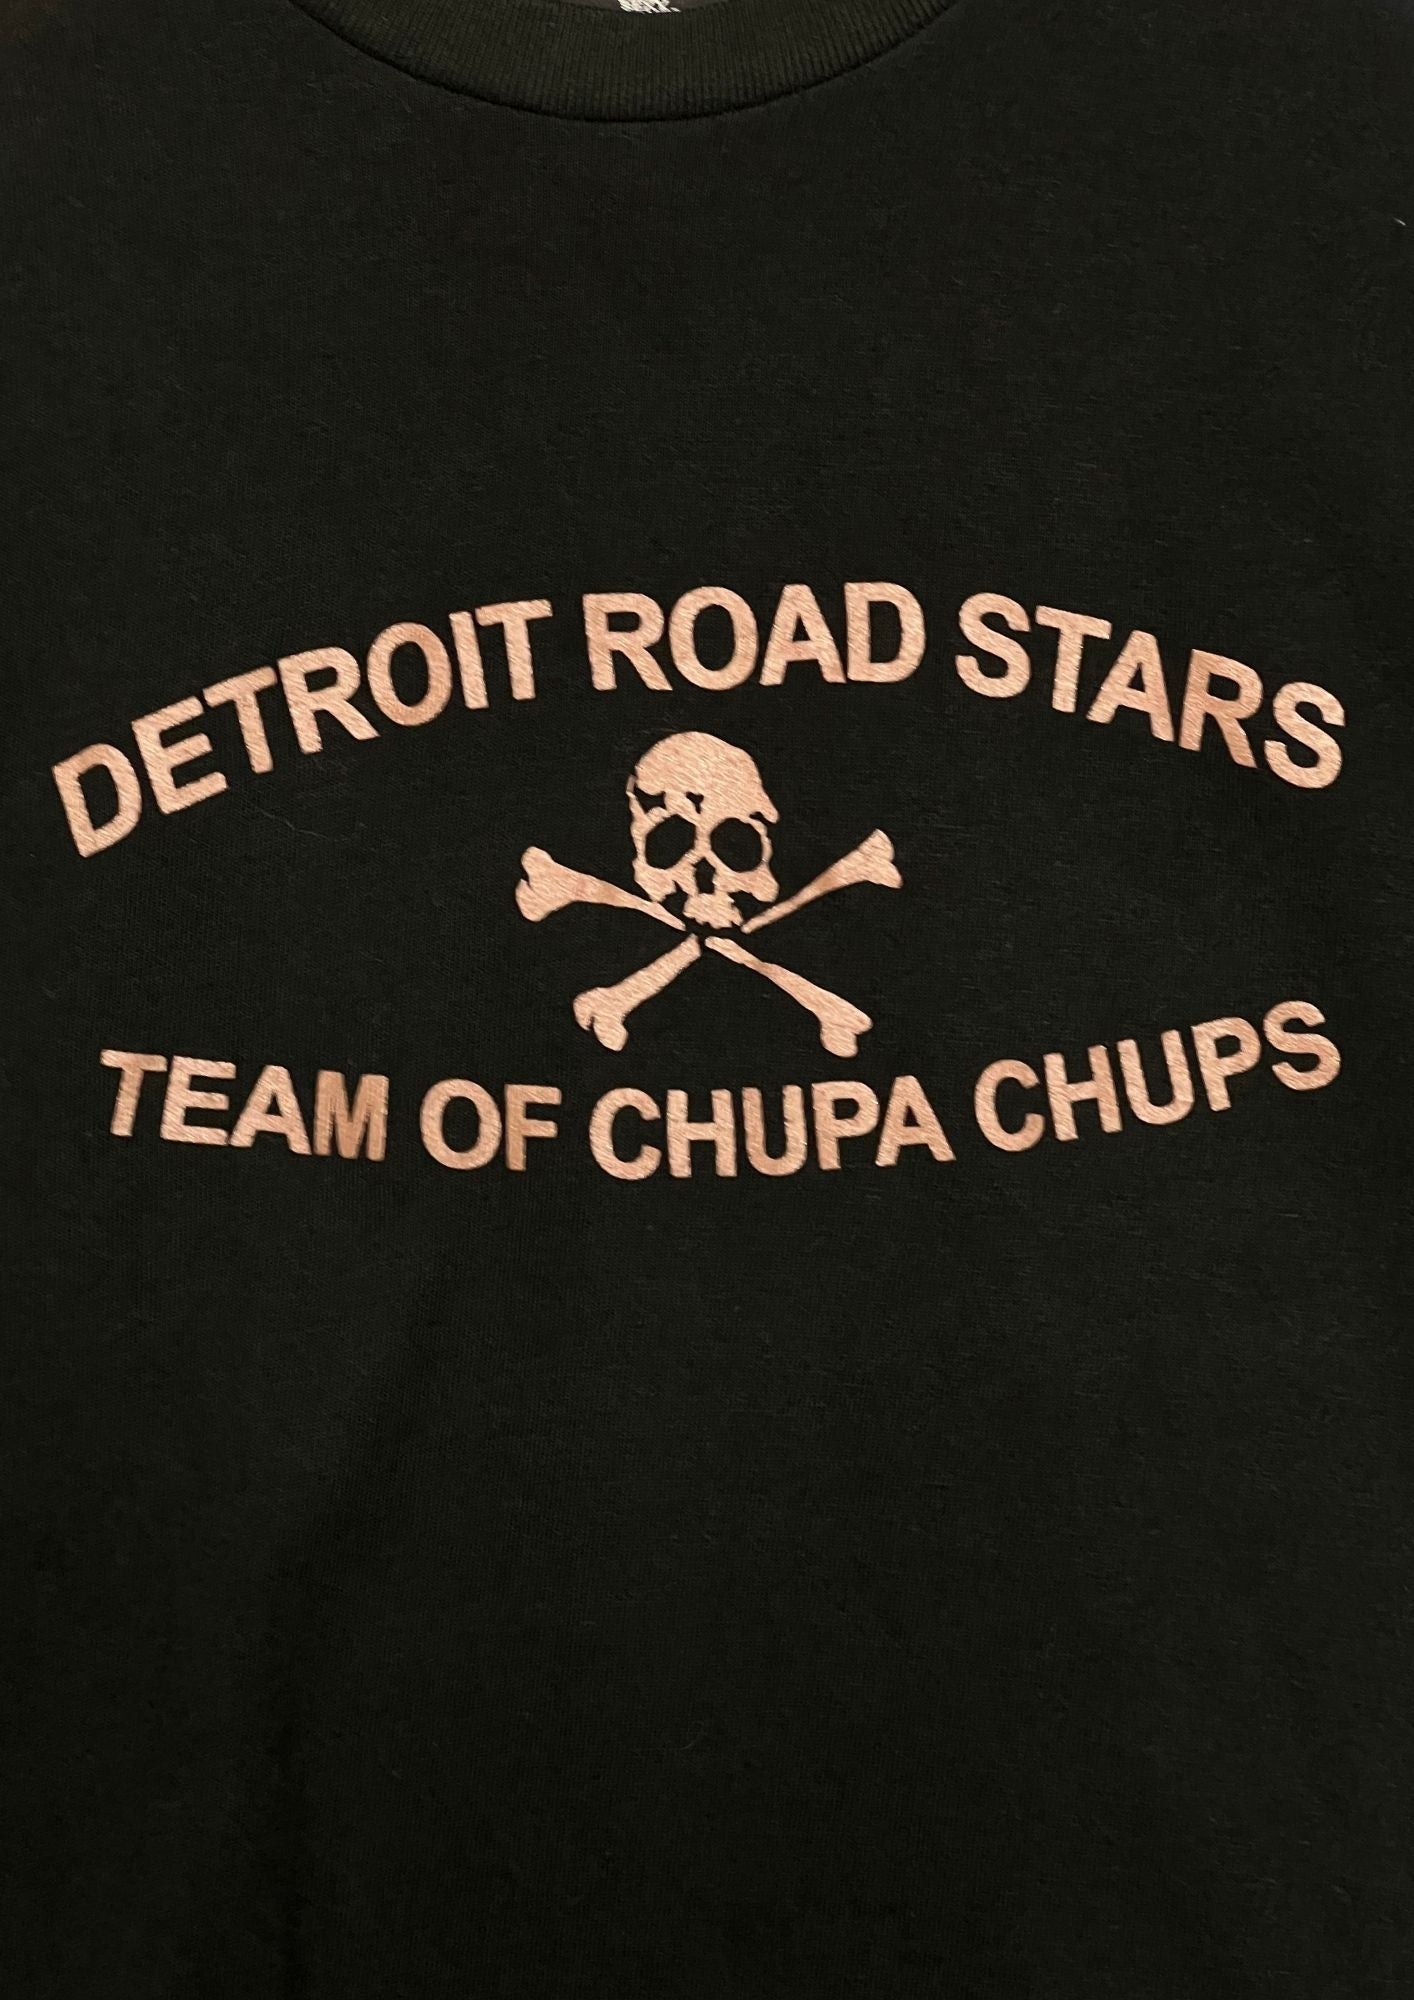 2004 JUDE Kenichi Asao 'Team of Chupa Chups' Japanese Band Tour T-shirt